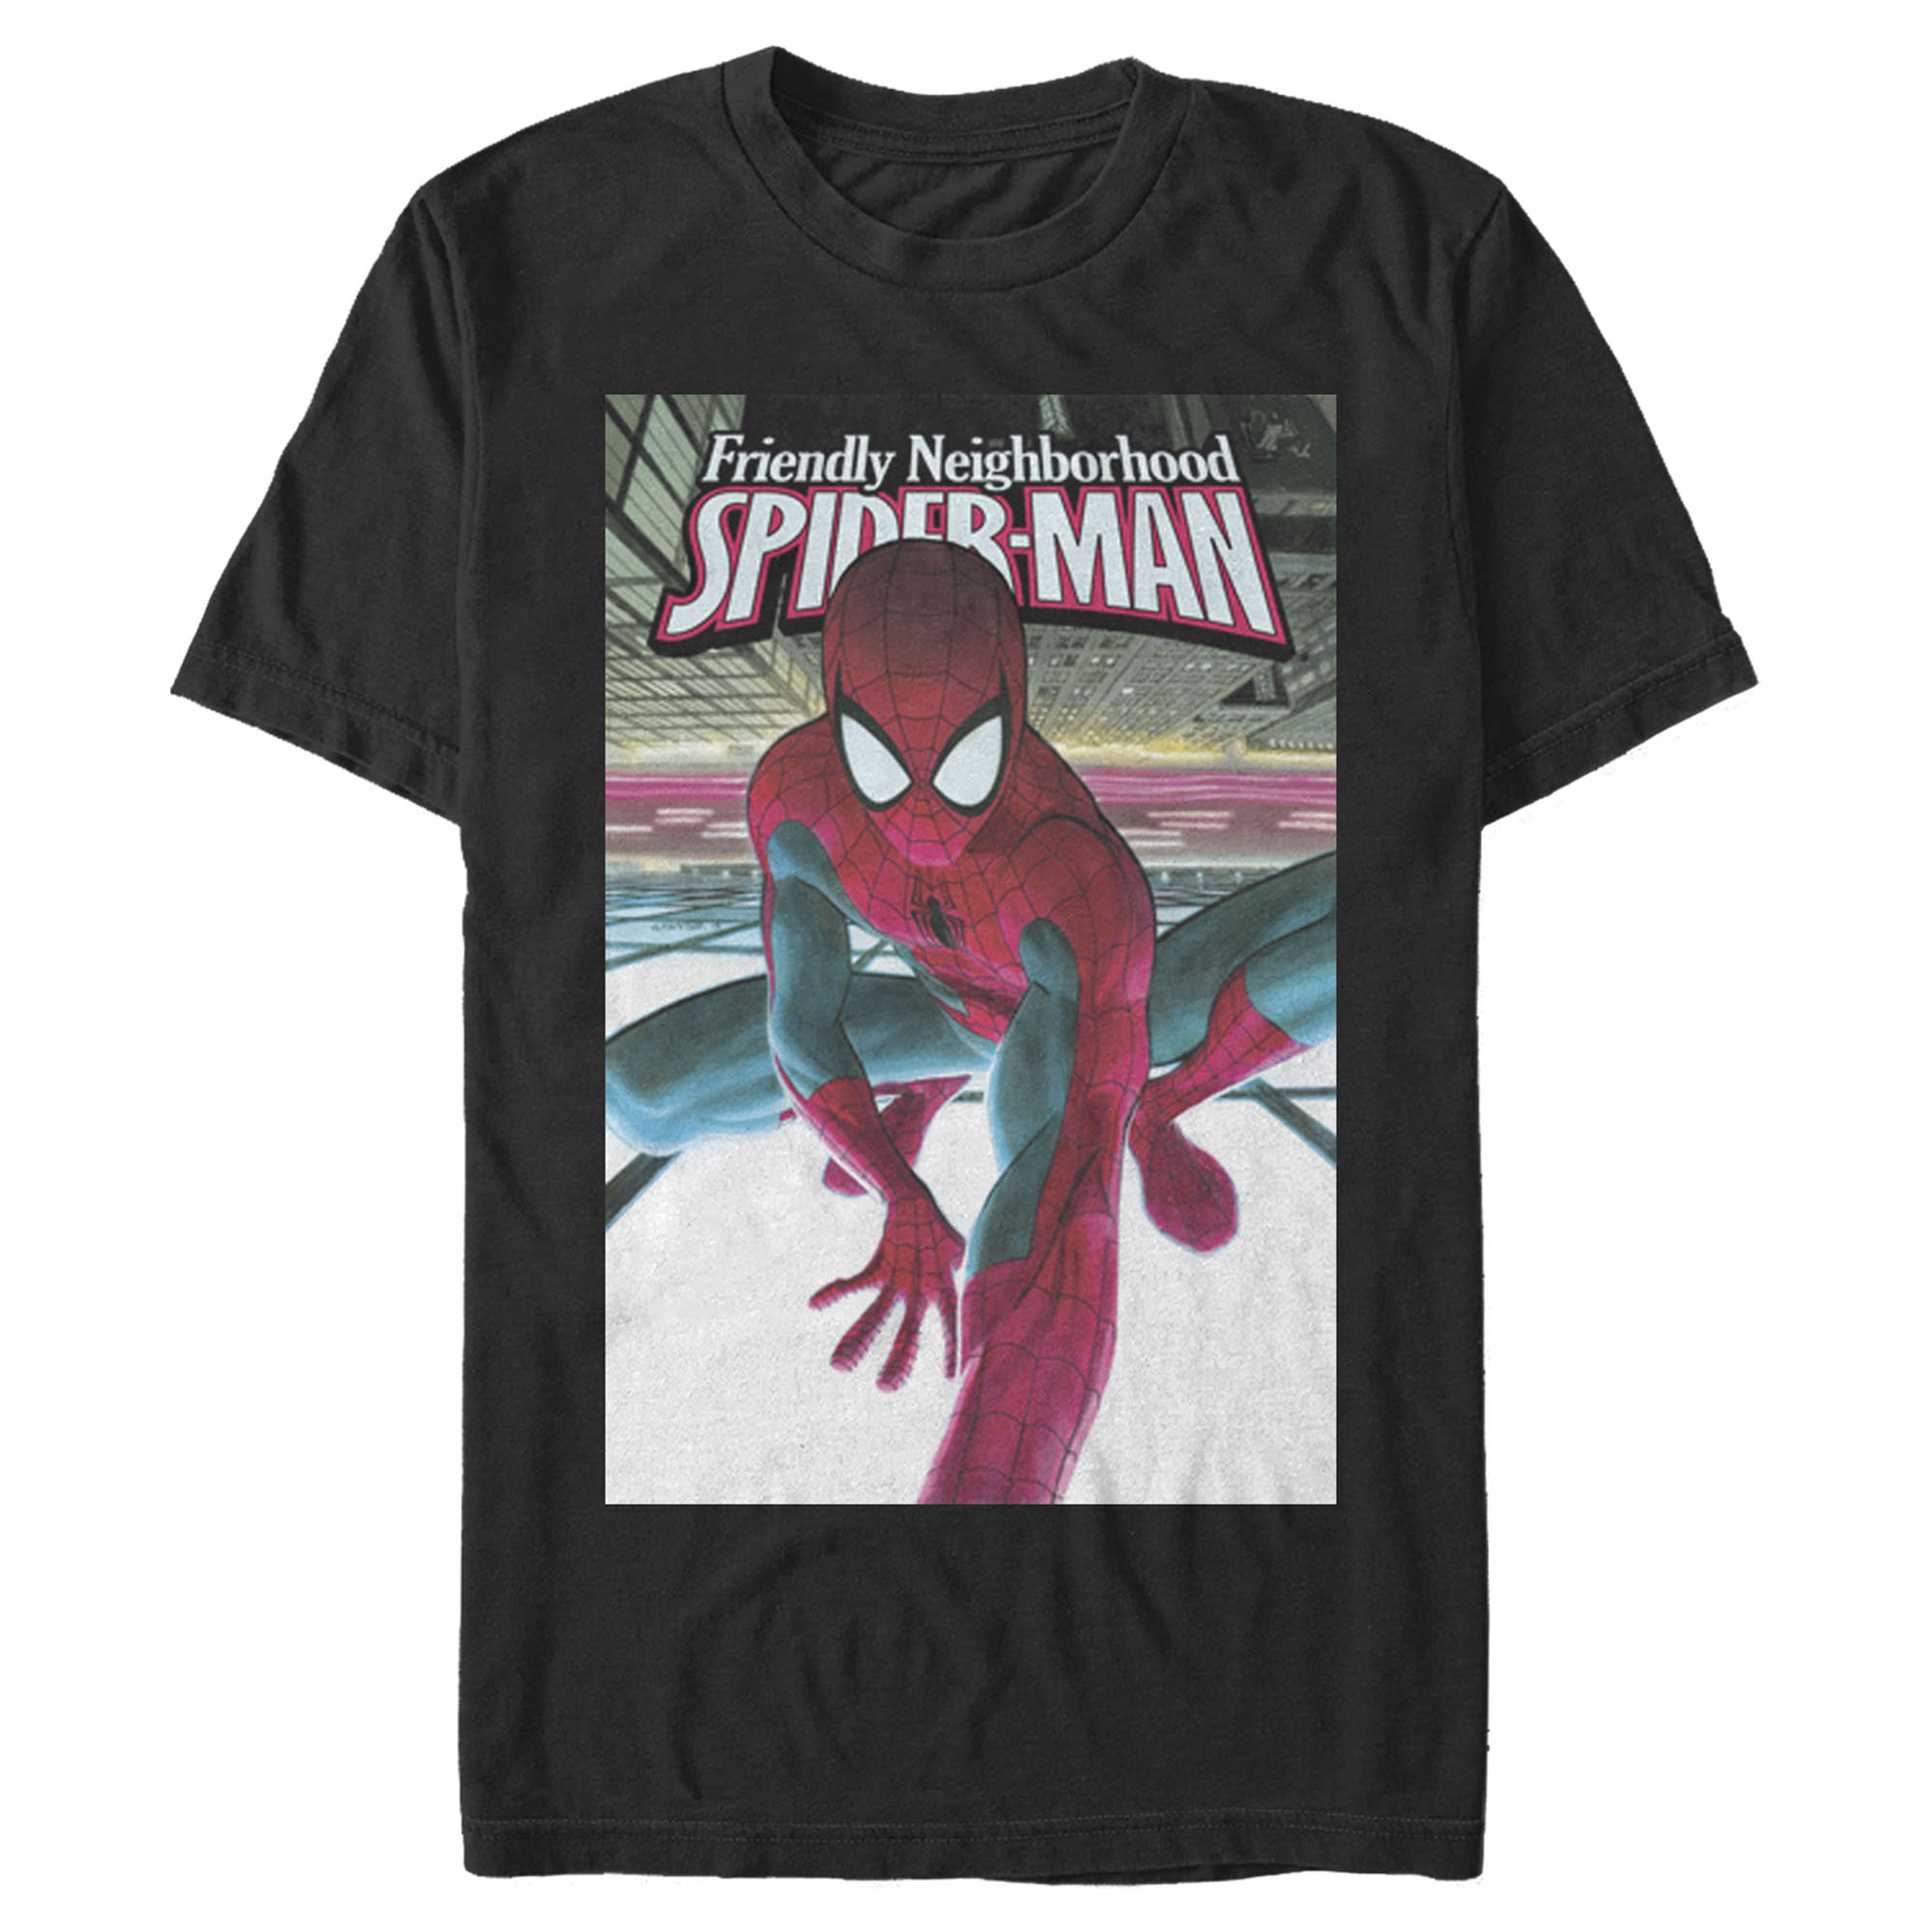 Men's Marvel Spider-Man Friendly Neighborhood  Graphic Tee Black 3X Large - image 1 of 4